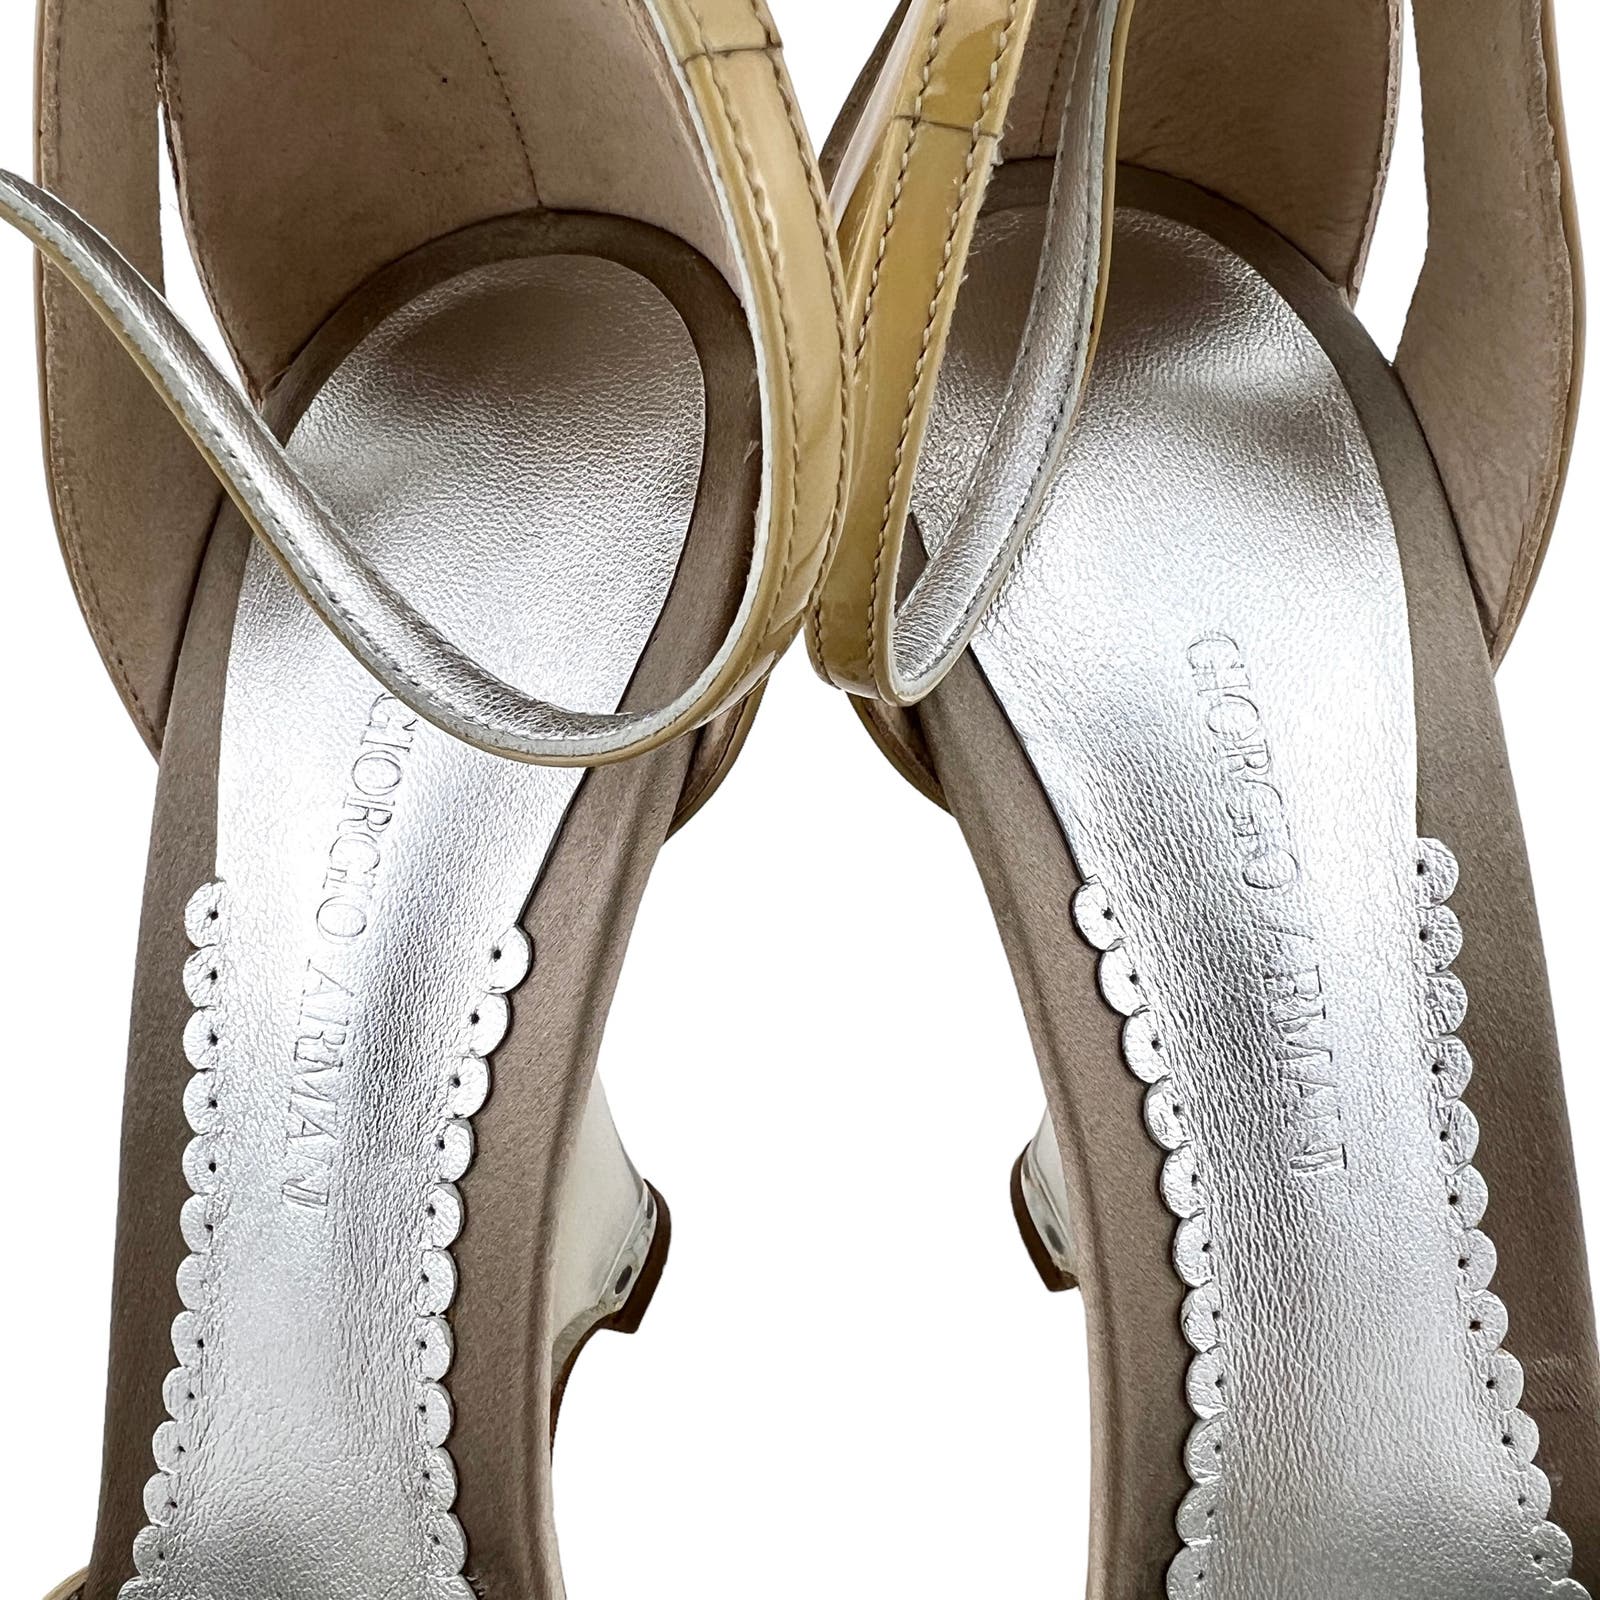 Giorgio Armani Women US 39.5 Nude Leather Heels Slim Wedge Sandals